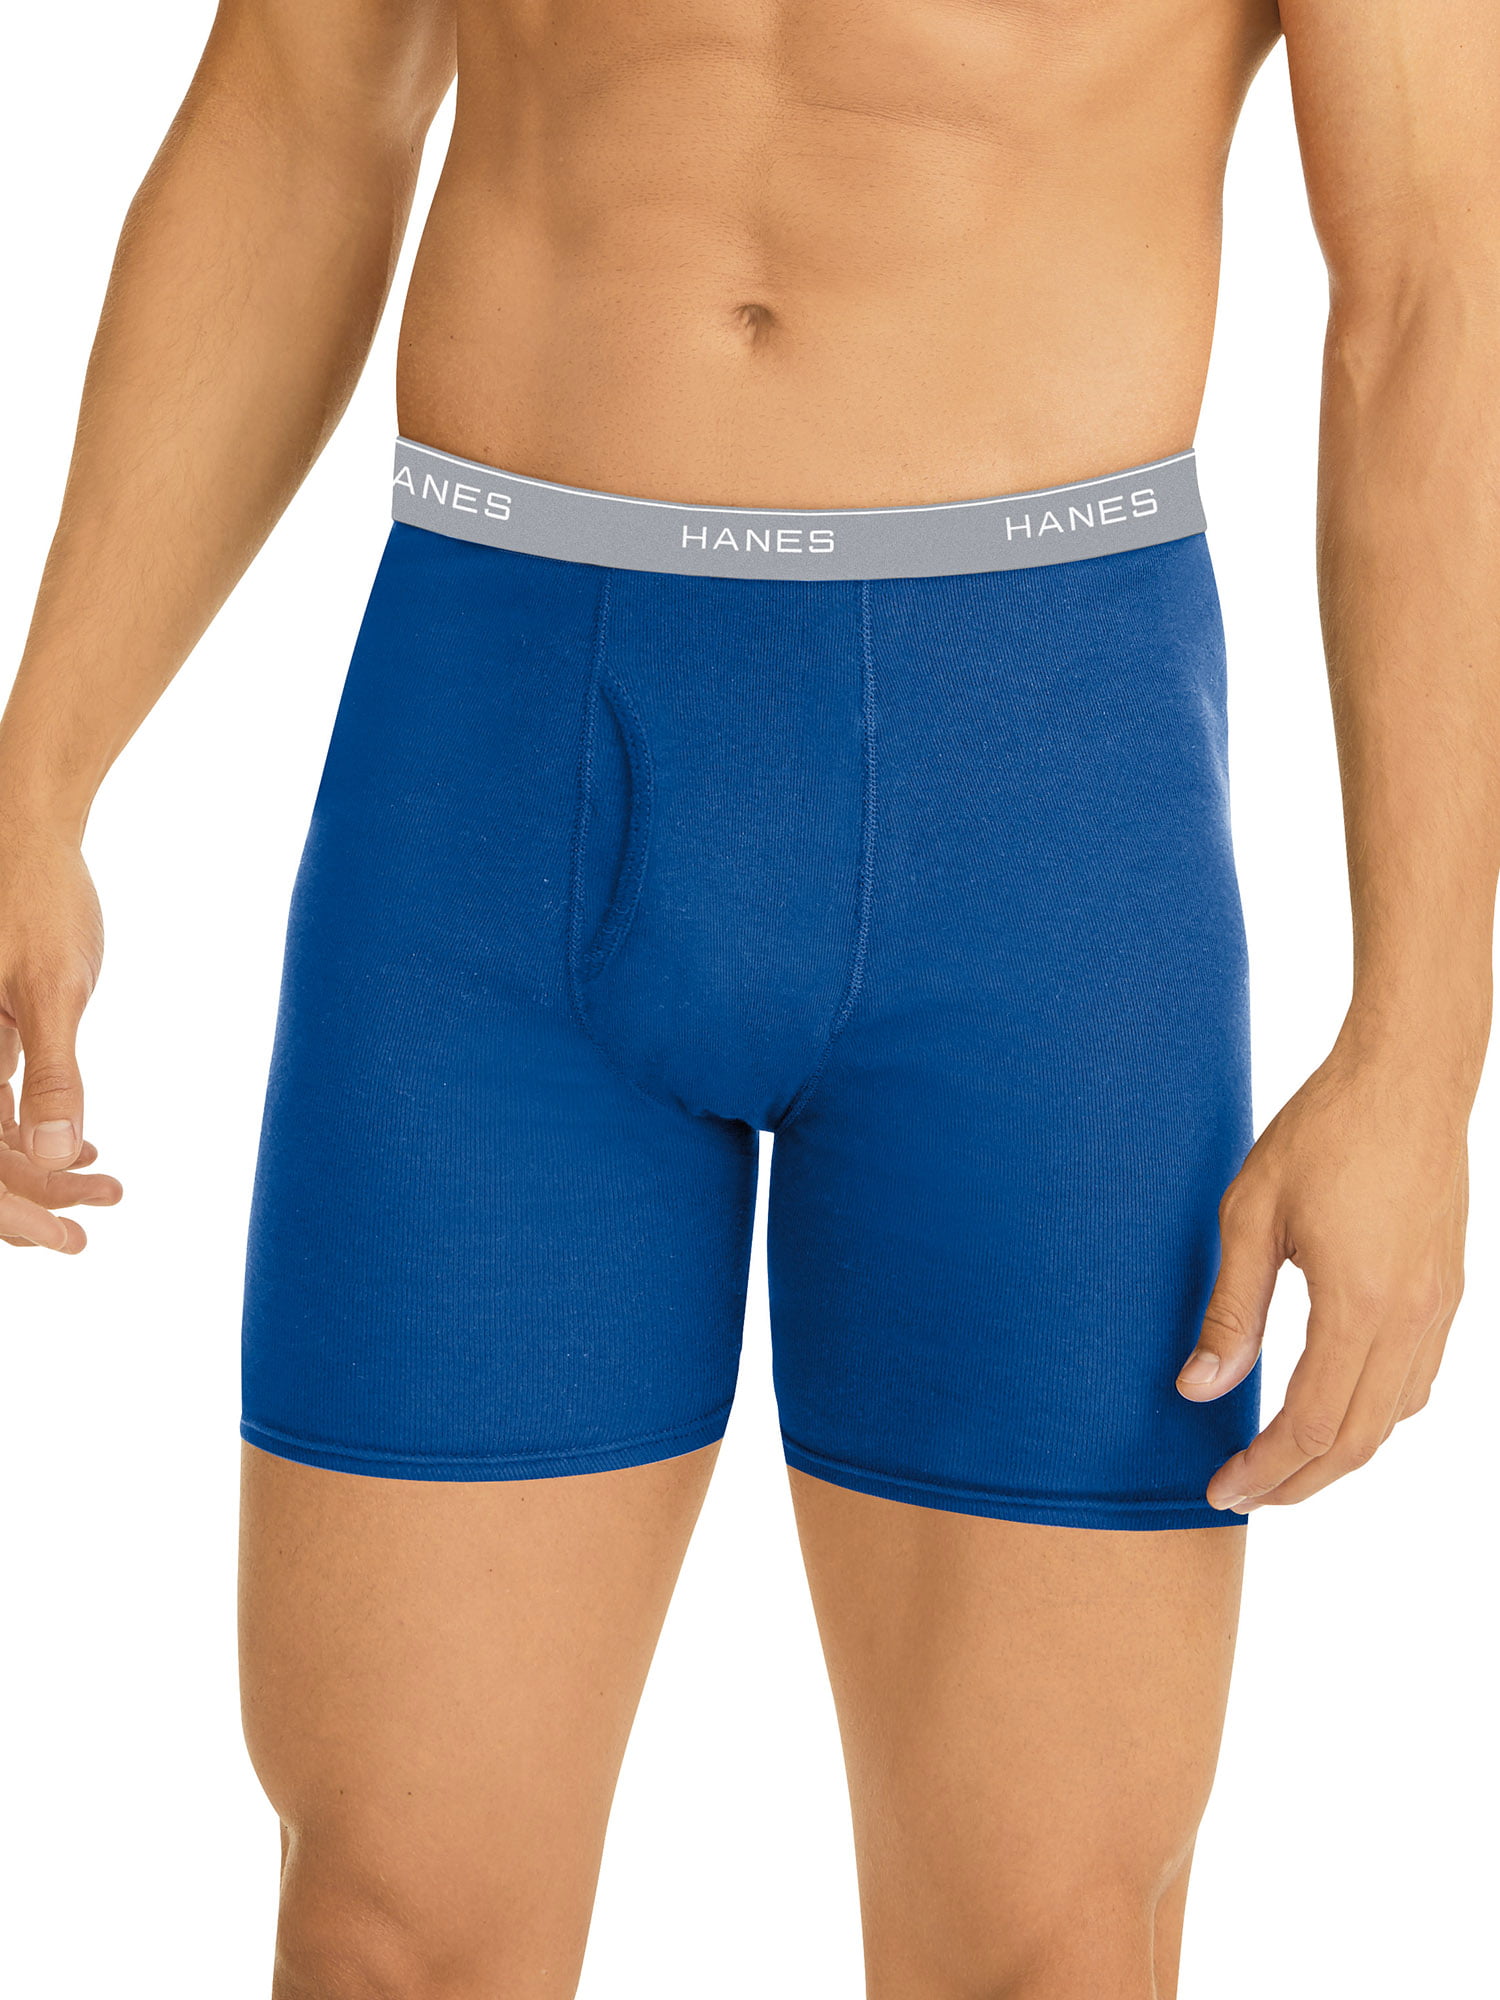 Hanes - Hanes Men's Tagless Boxer Briefs, 10 pack - Walmart.com ...